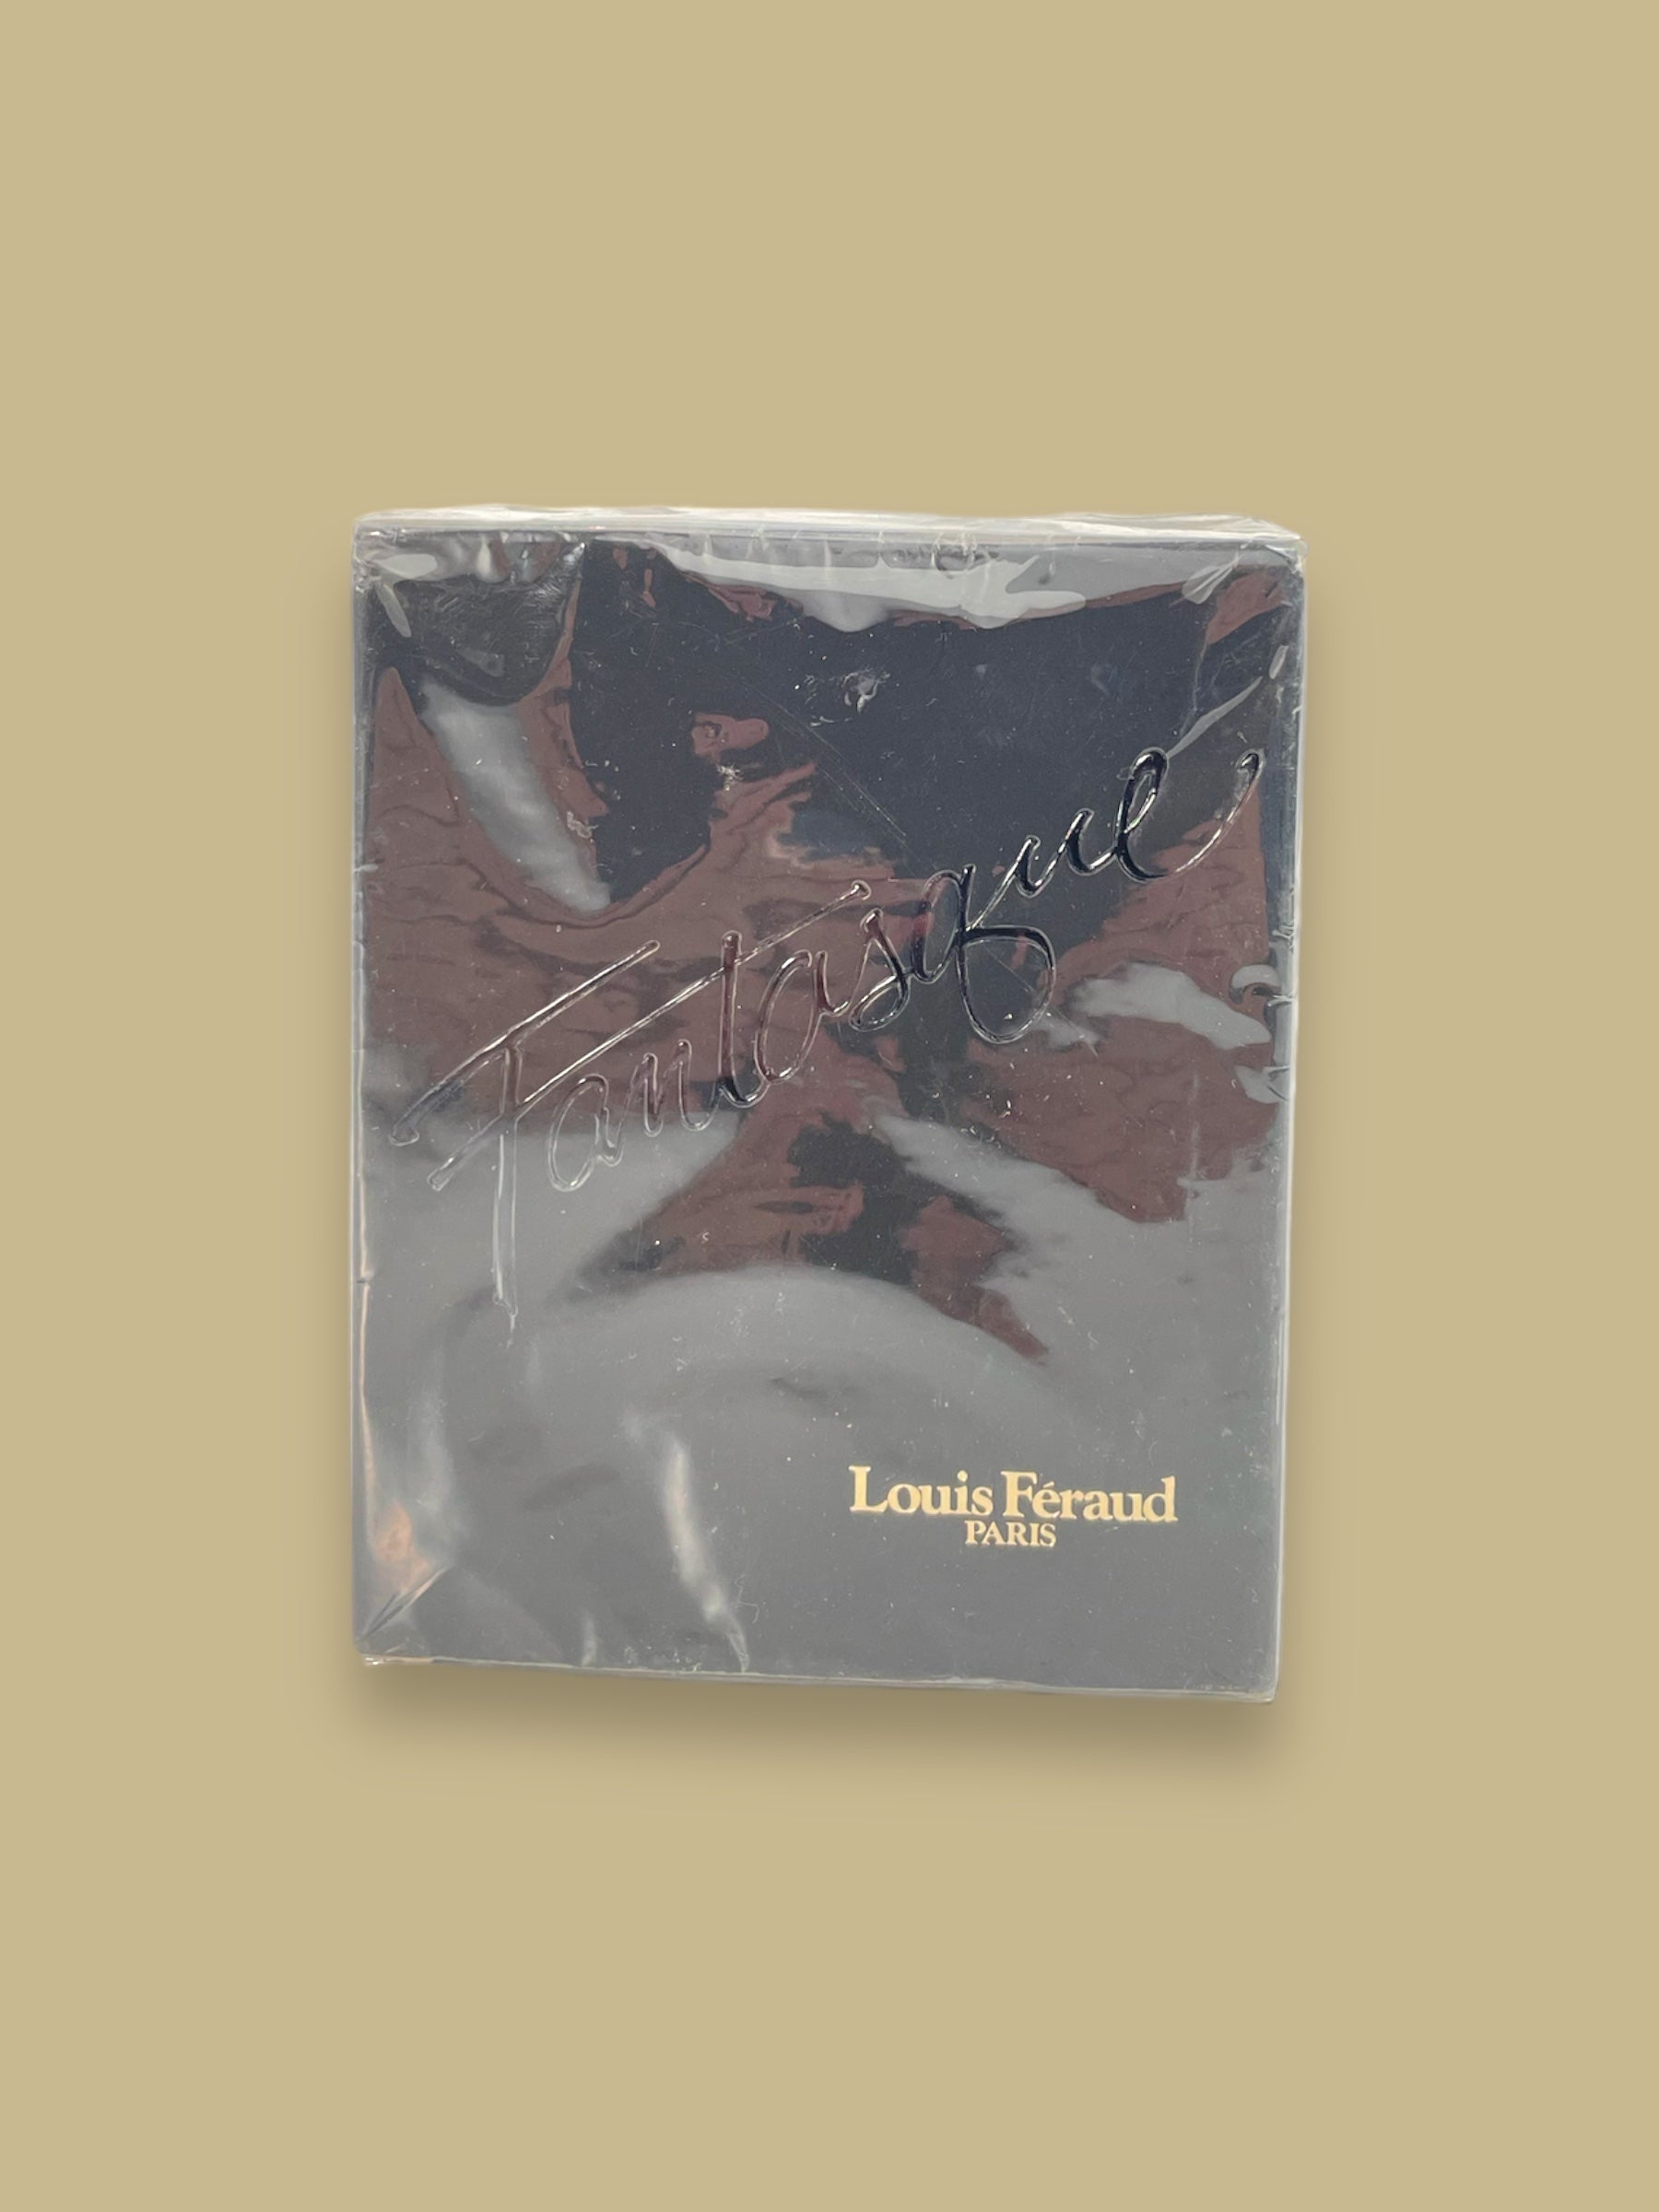 LOUIS FERAUD for Fantasque by AVON Perfume Pendant - New